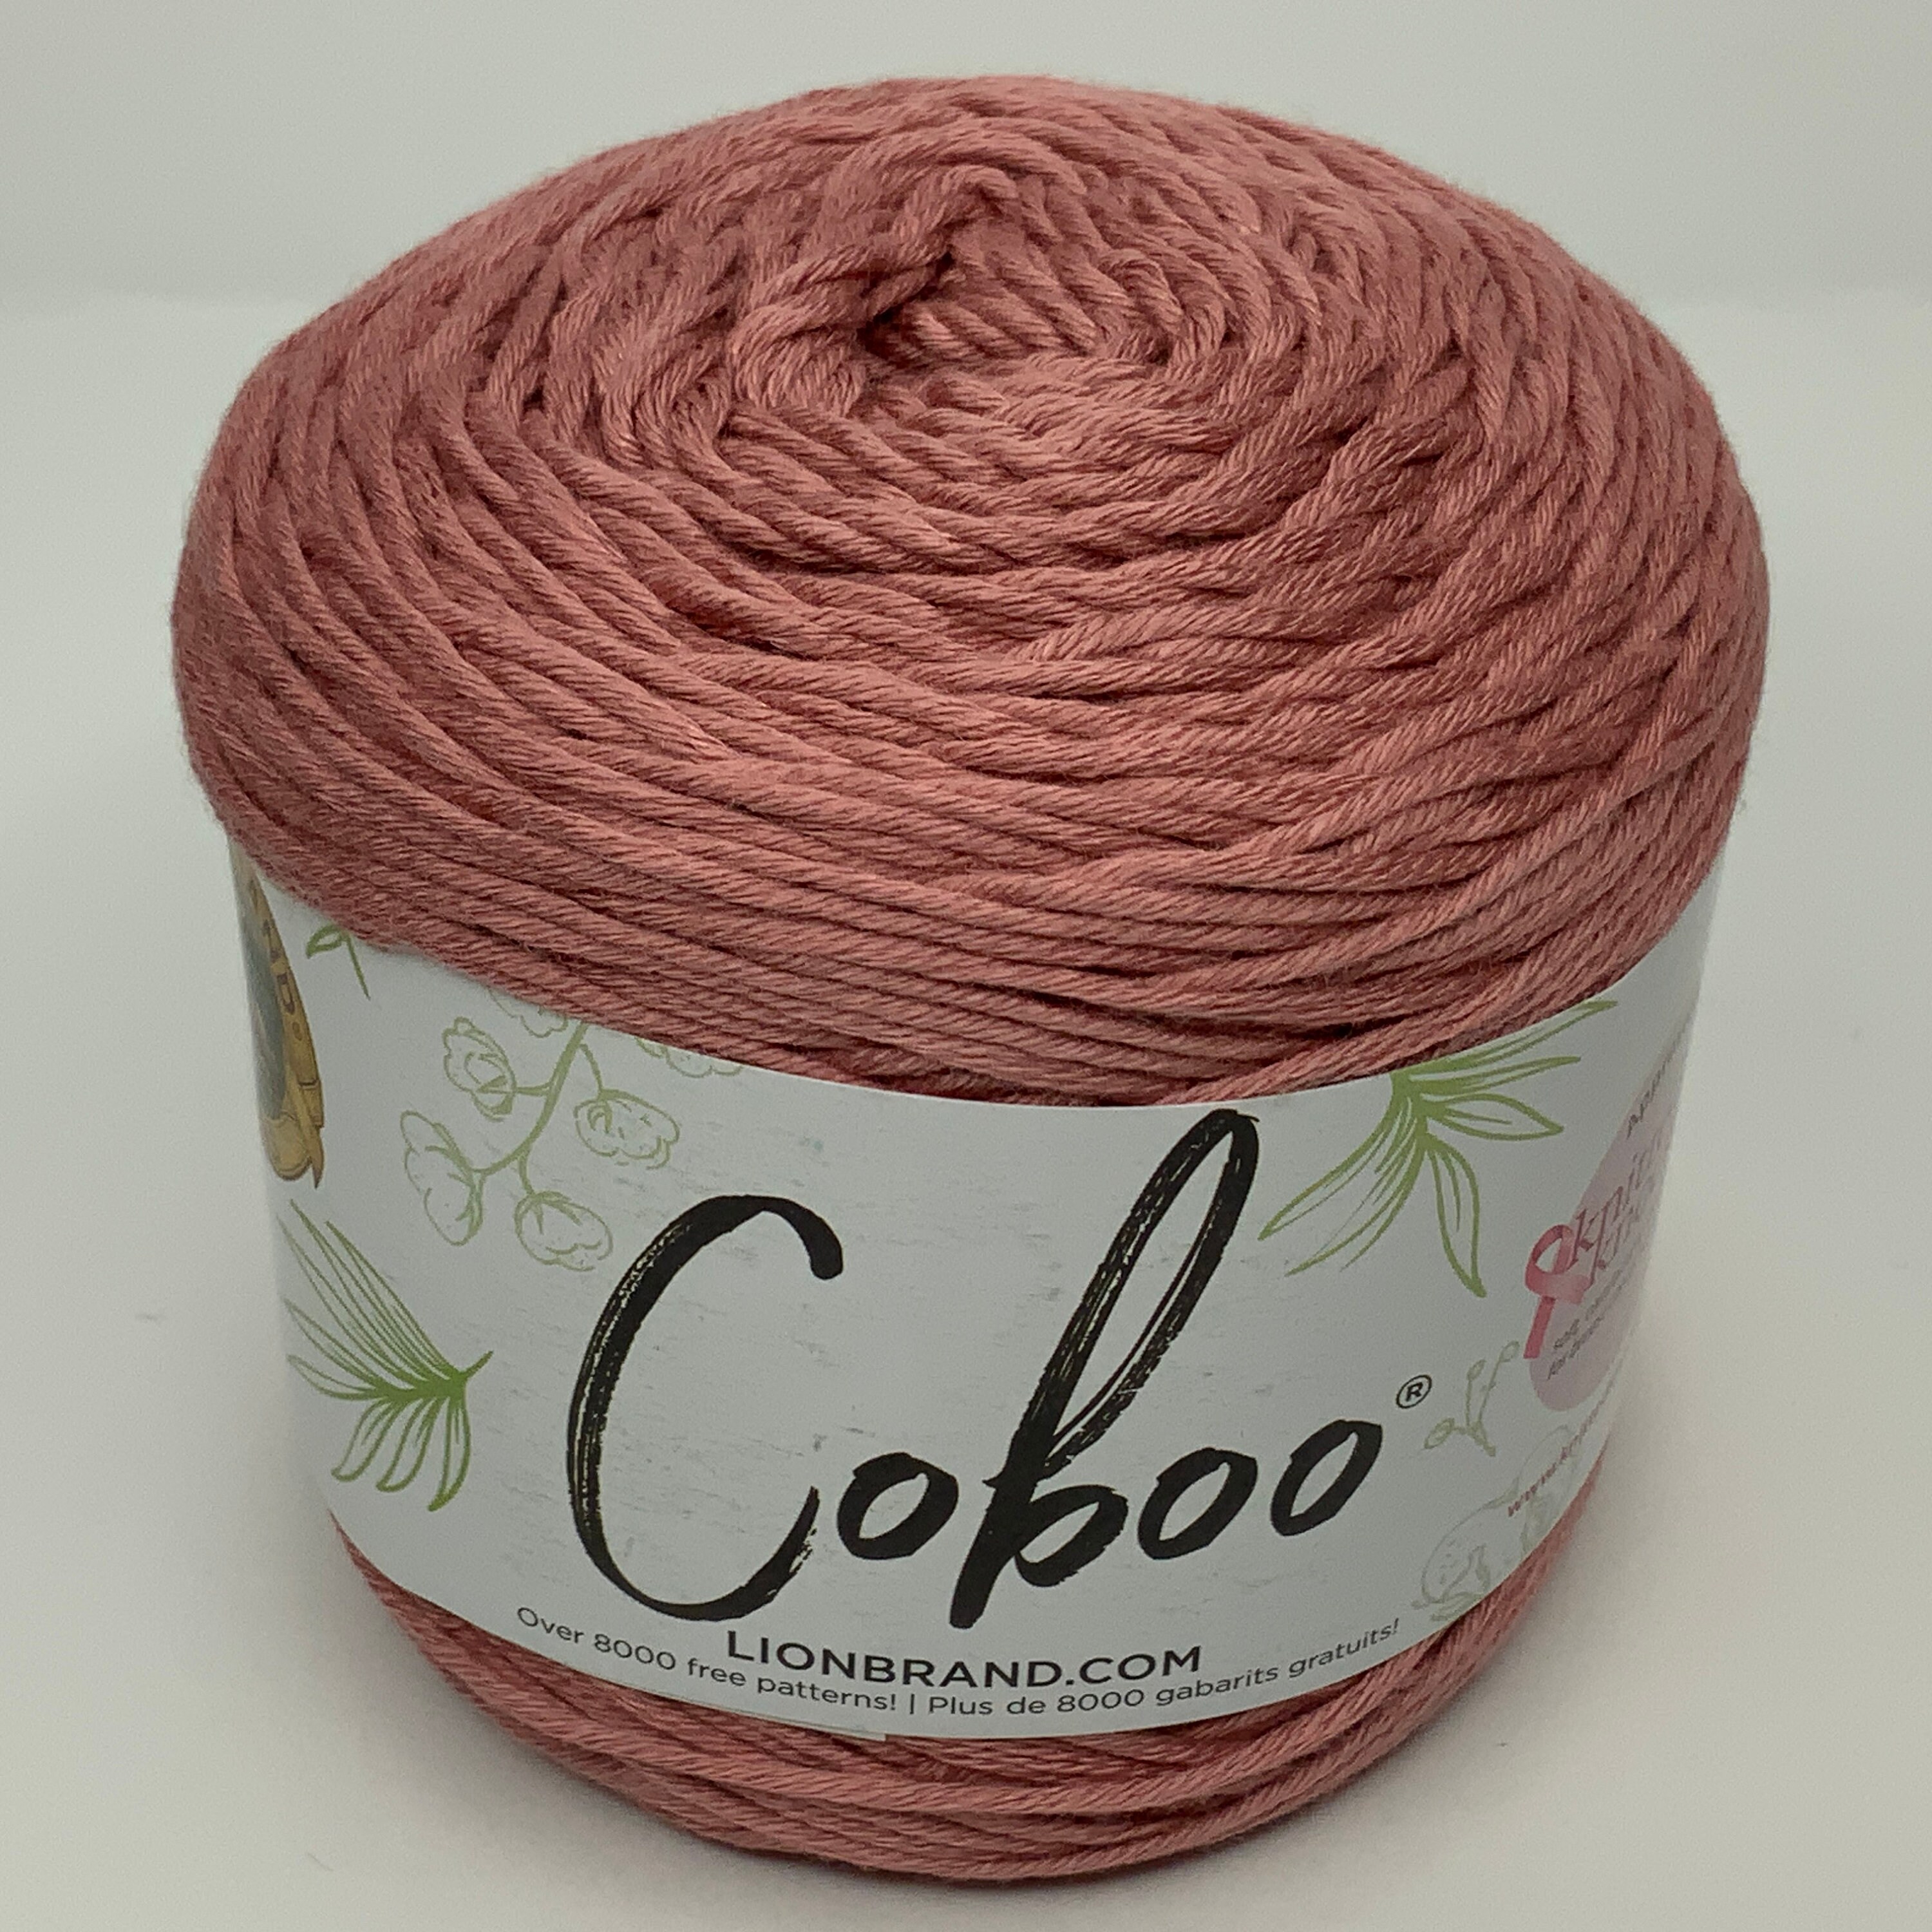 magenta coboo yarn